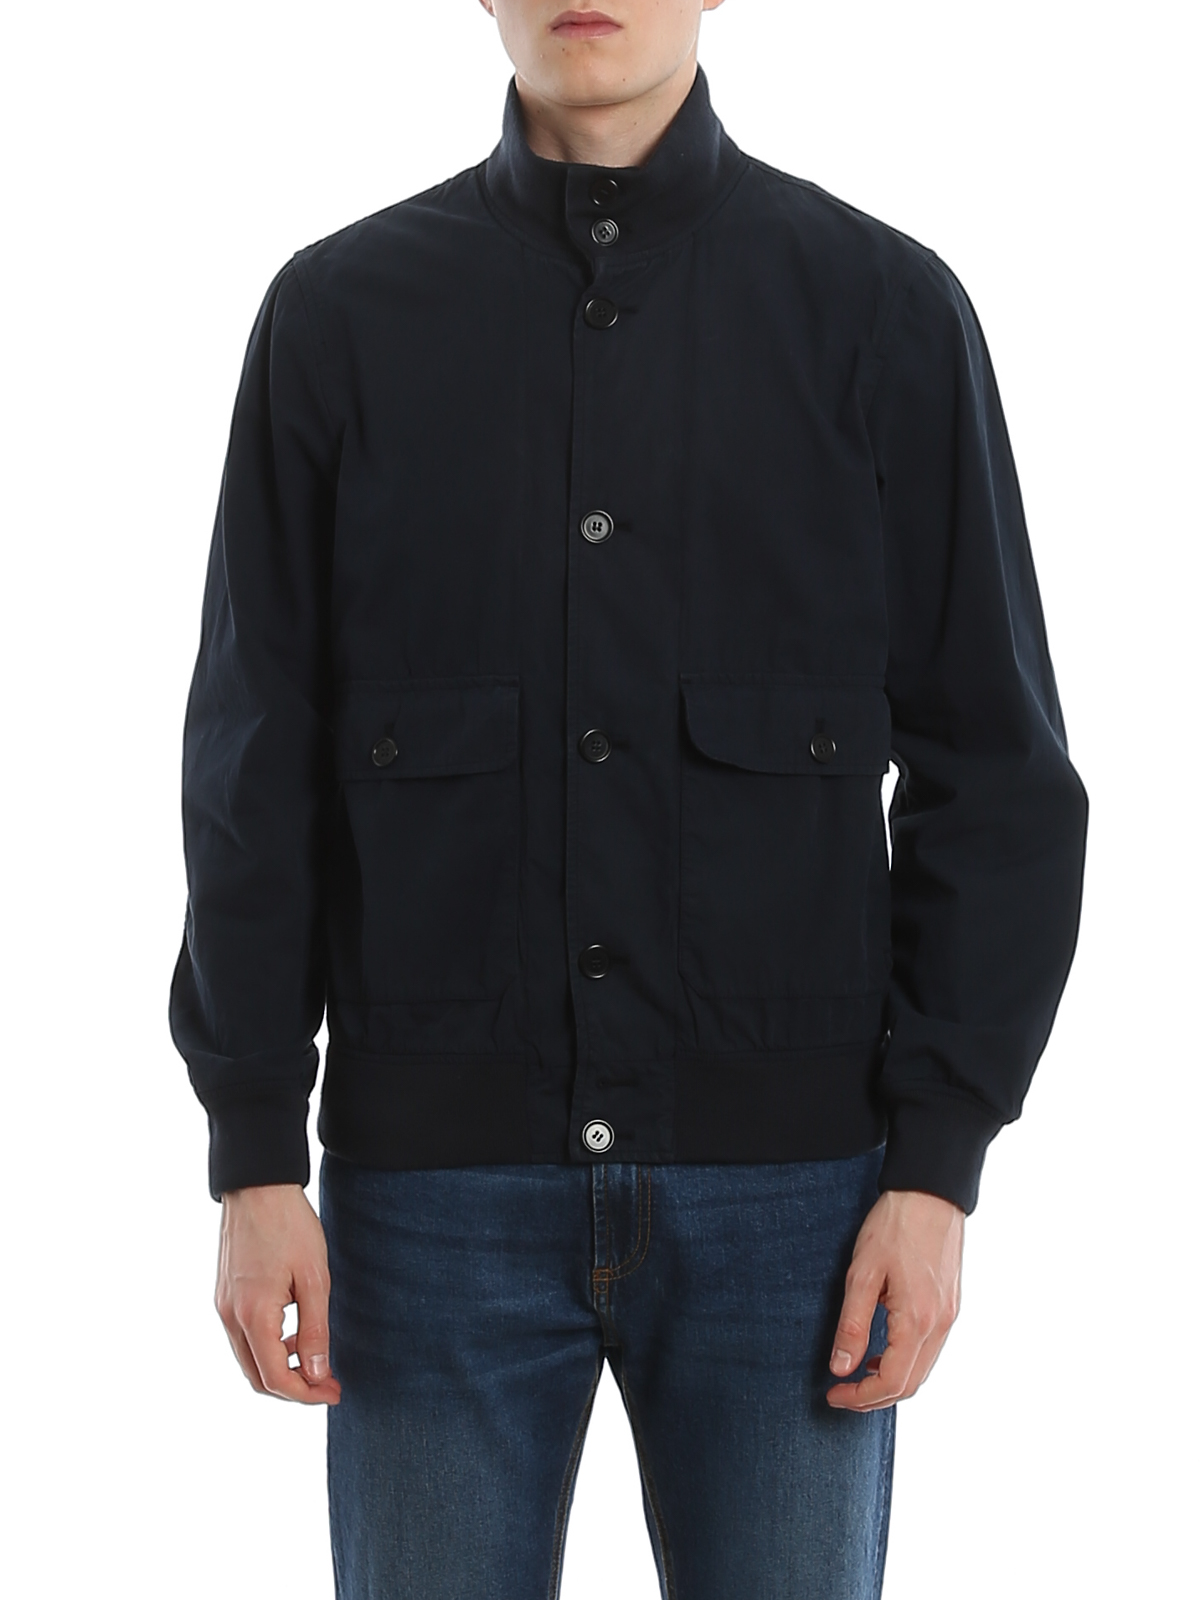 Casual jackets Aspesi - Astor cotton jacket - CG86G17885098 | iKRIX.com